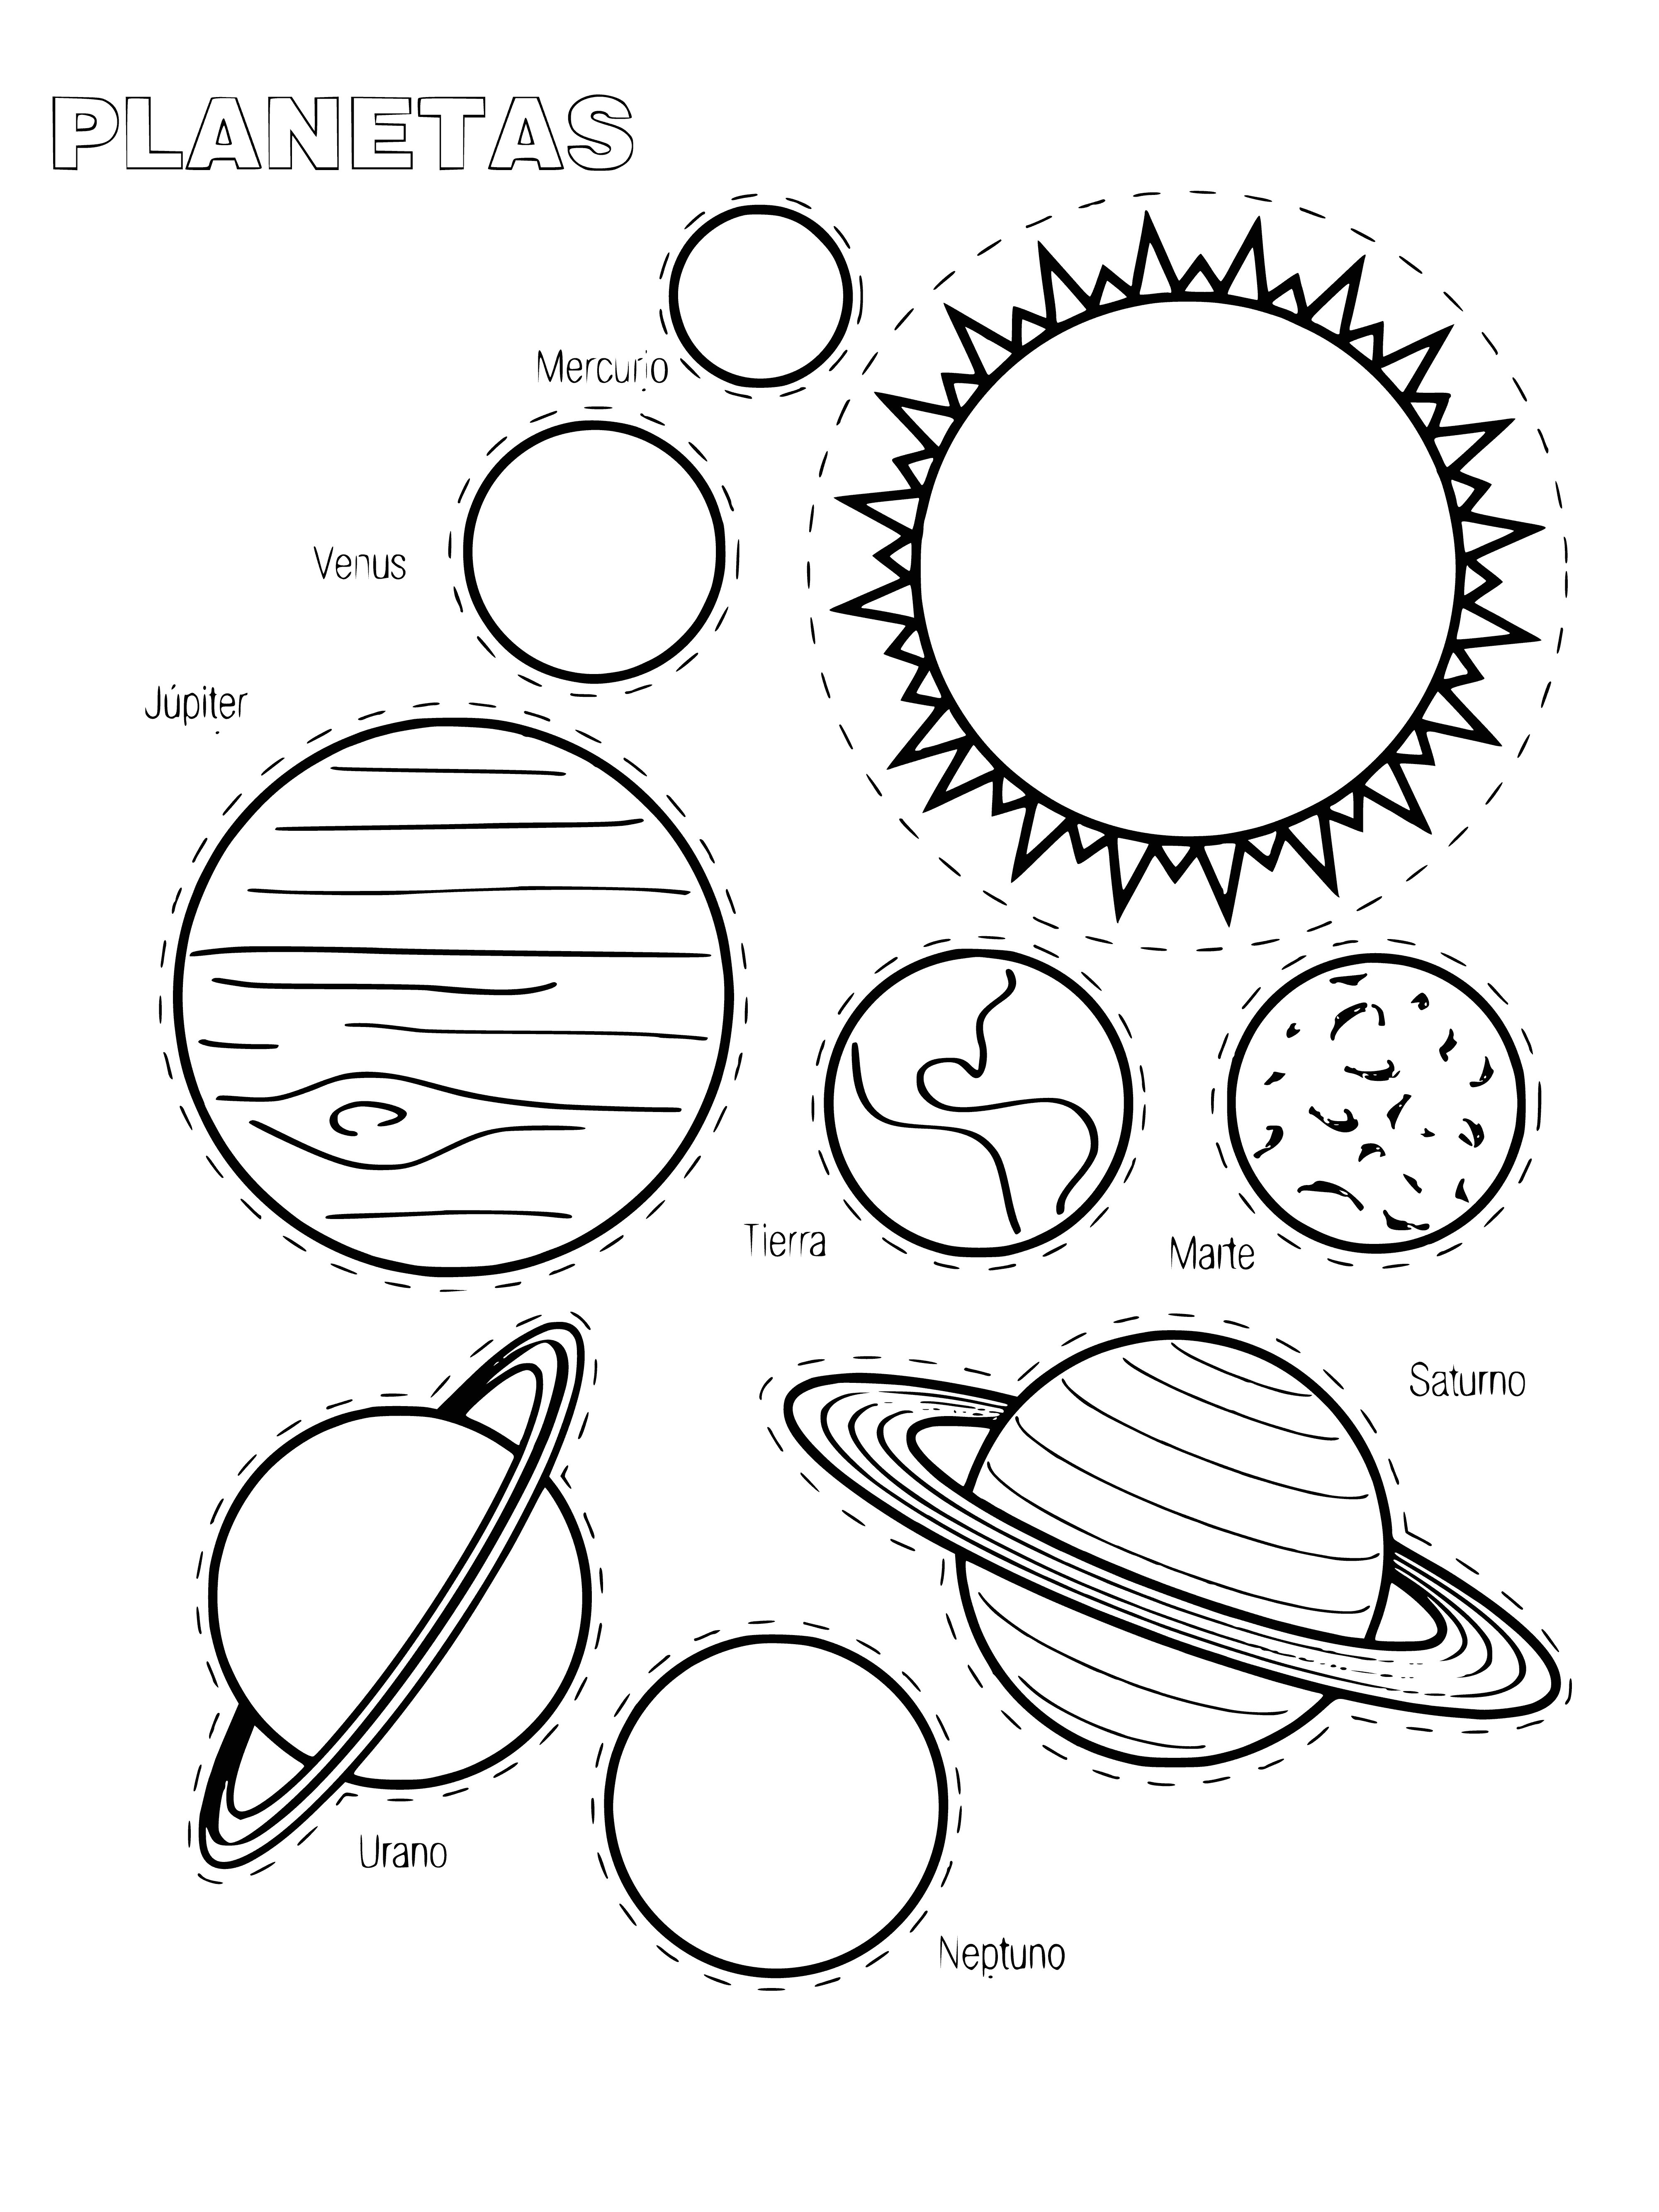 coloring page: Nine planets orbit the sun. Mercury closest to sun, Venus next, Earth has life, Mars & Uranus cold, Jupiter & Saturn have rings, Neptune & Pluto cold & small.